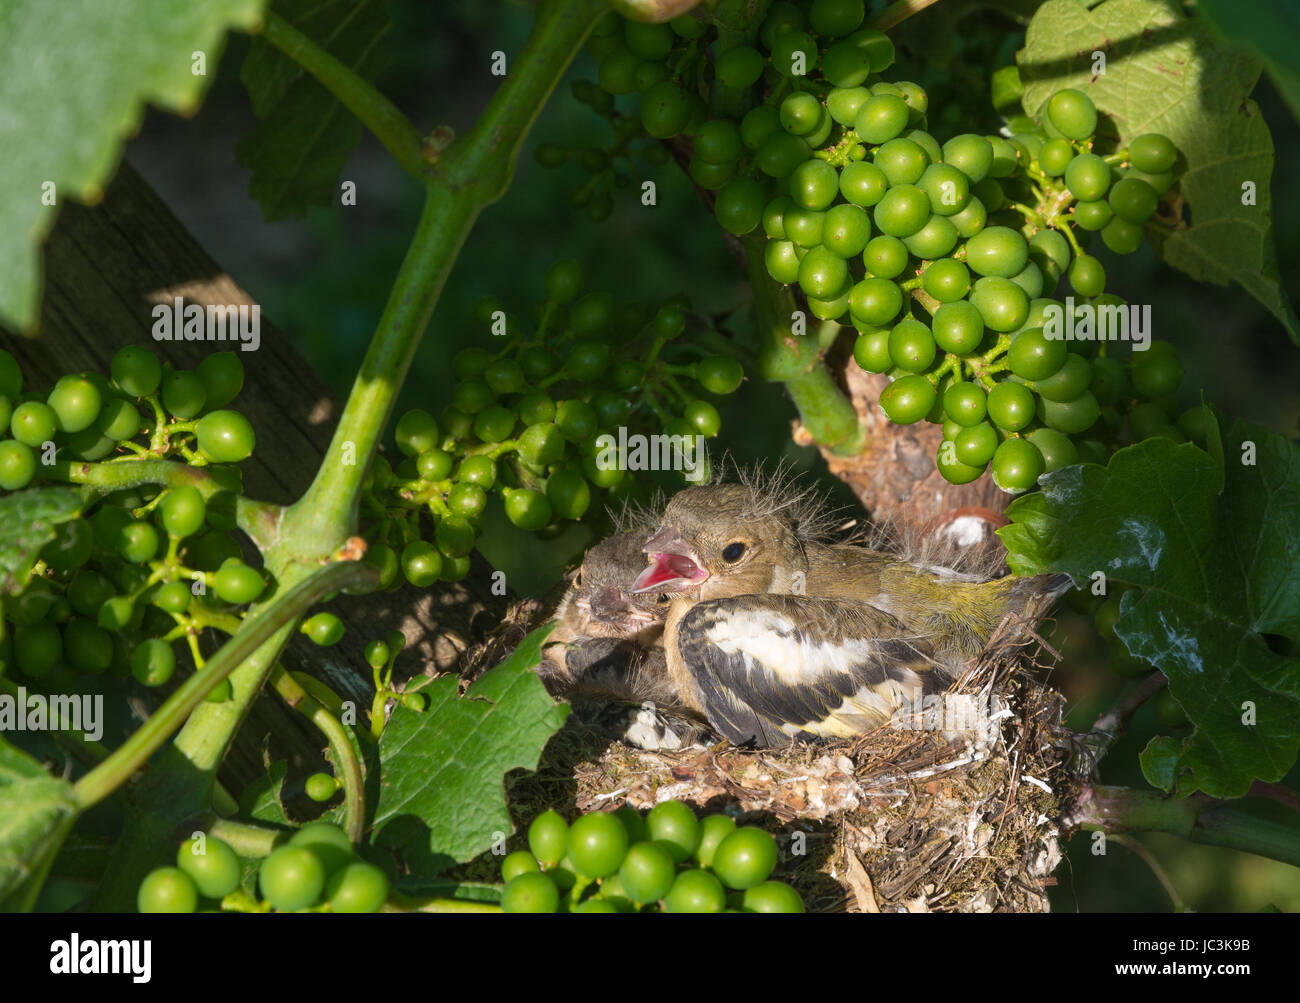 Eurasian tree sparrow (Passer montanus). newborn baby birds in nest on a vineyard Stock Photo